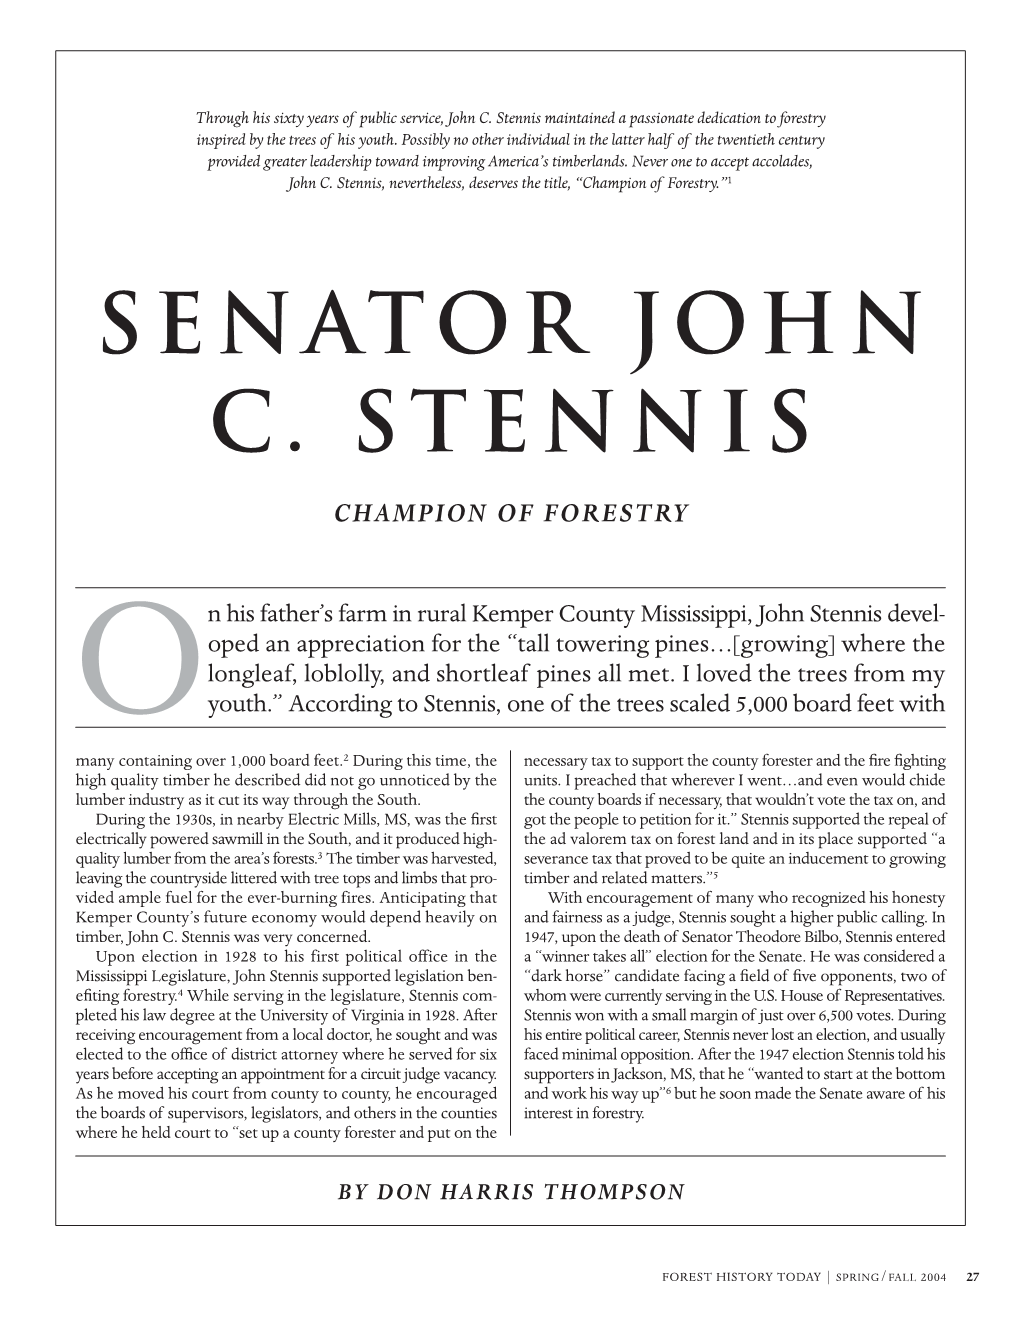 Senator John C. Stennis